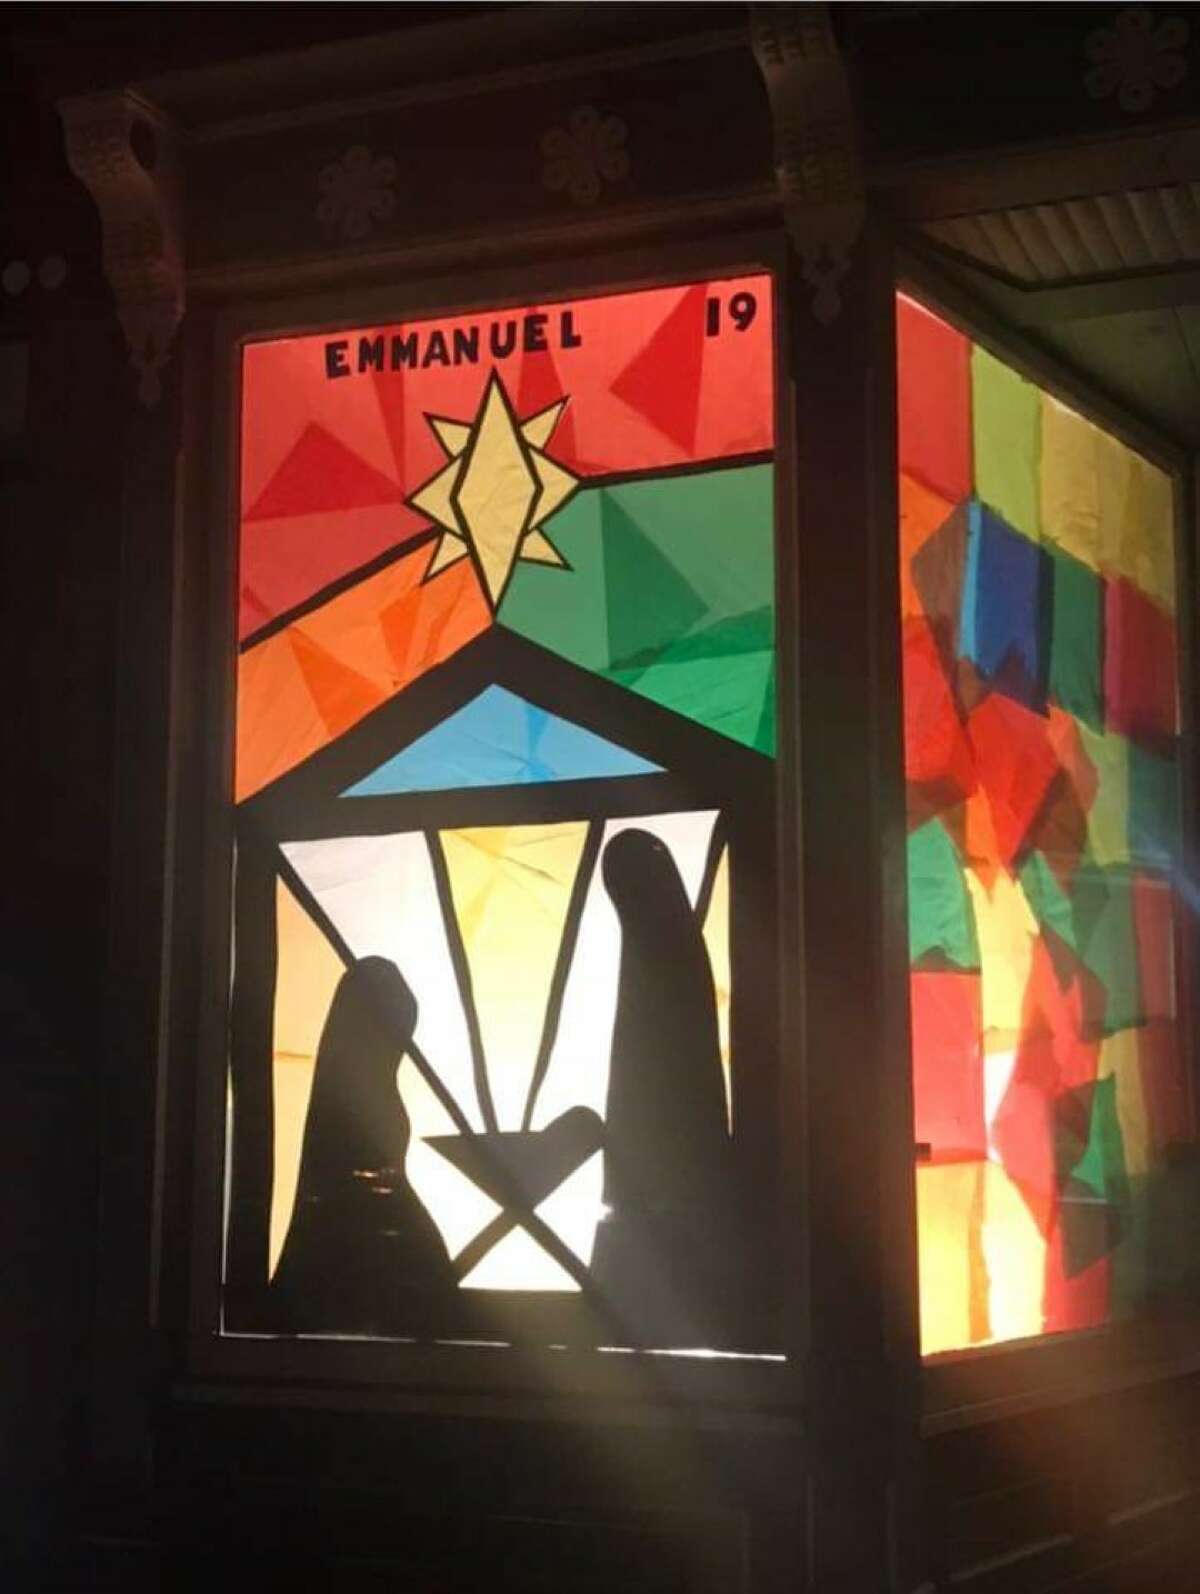 Cambridge window decorations from 2019.